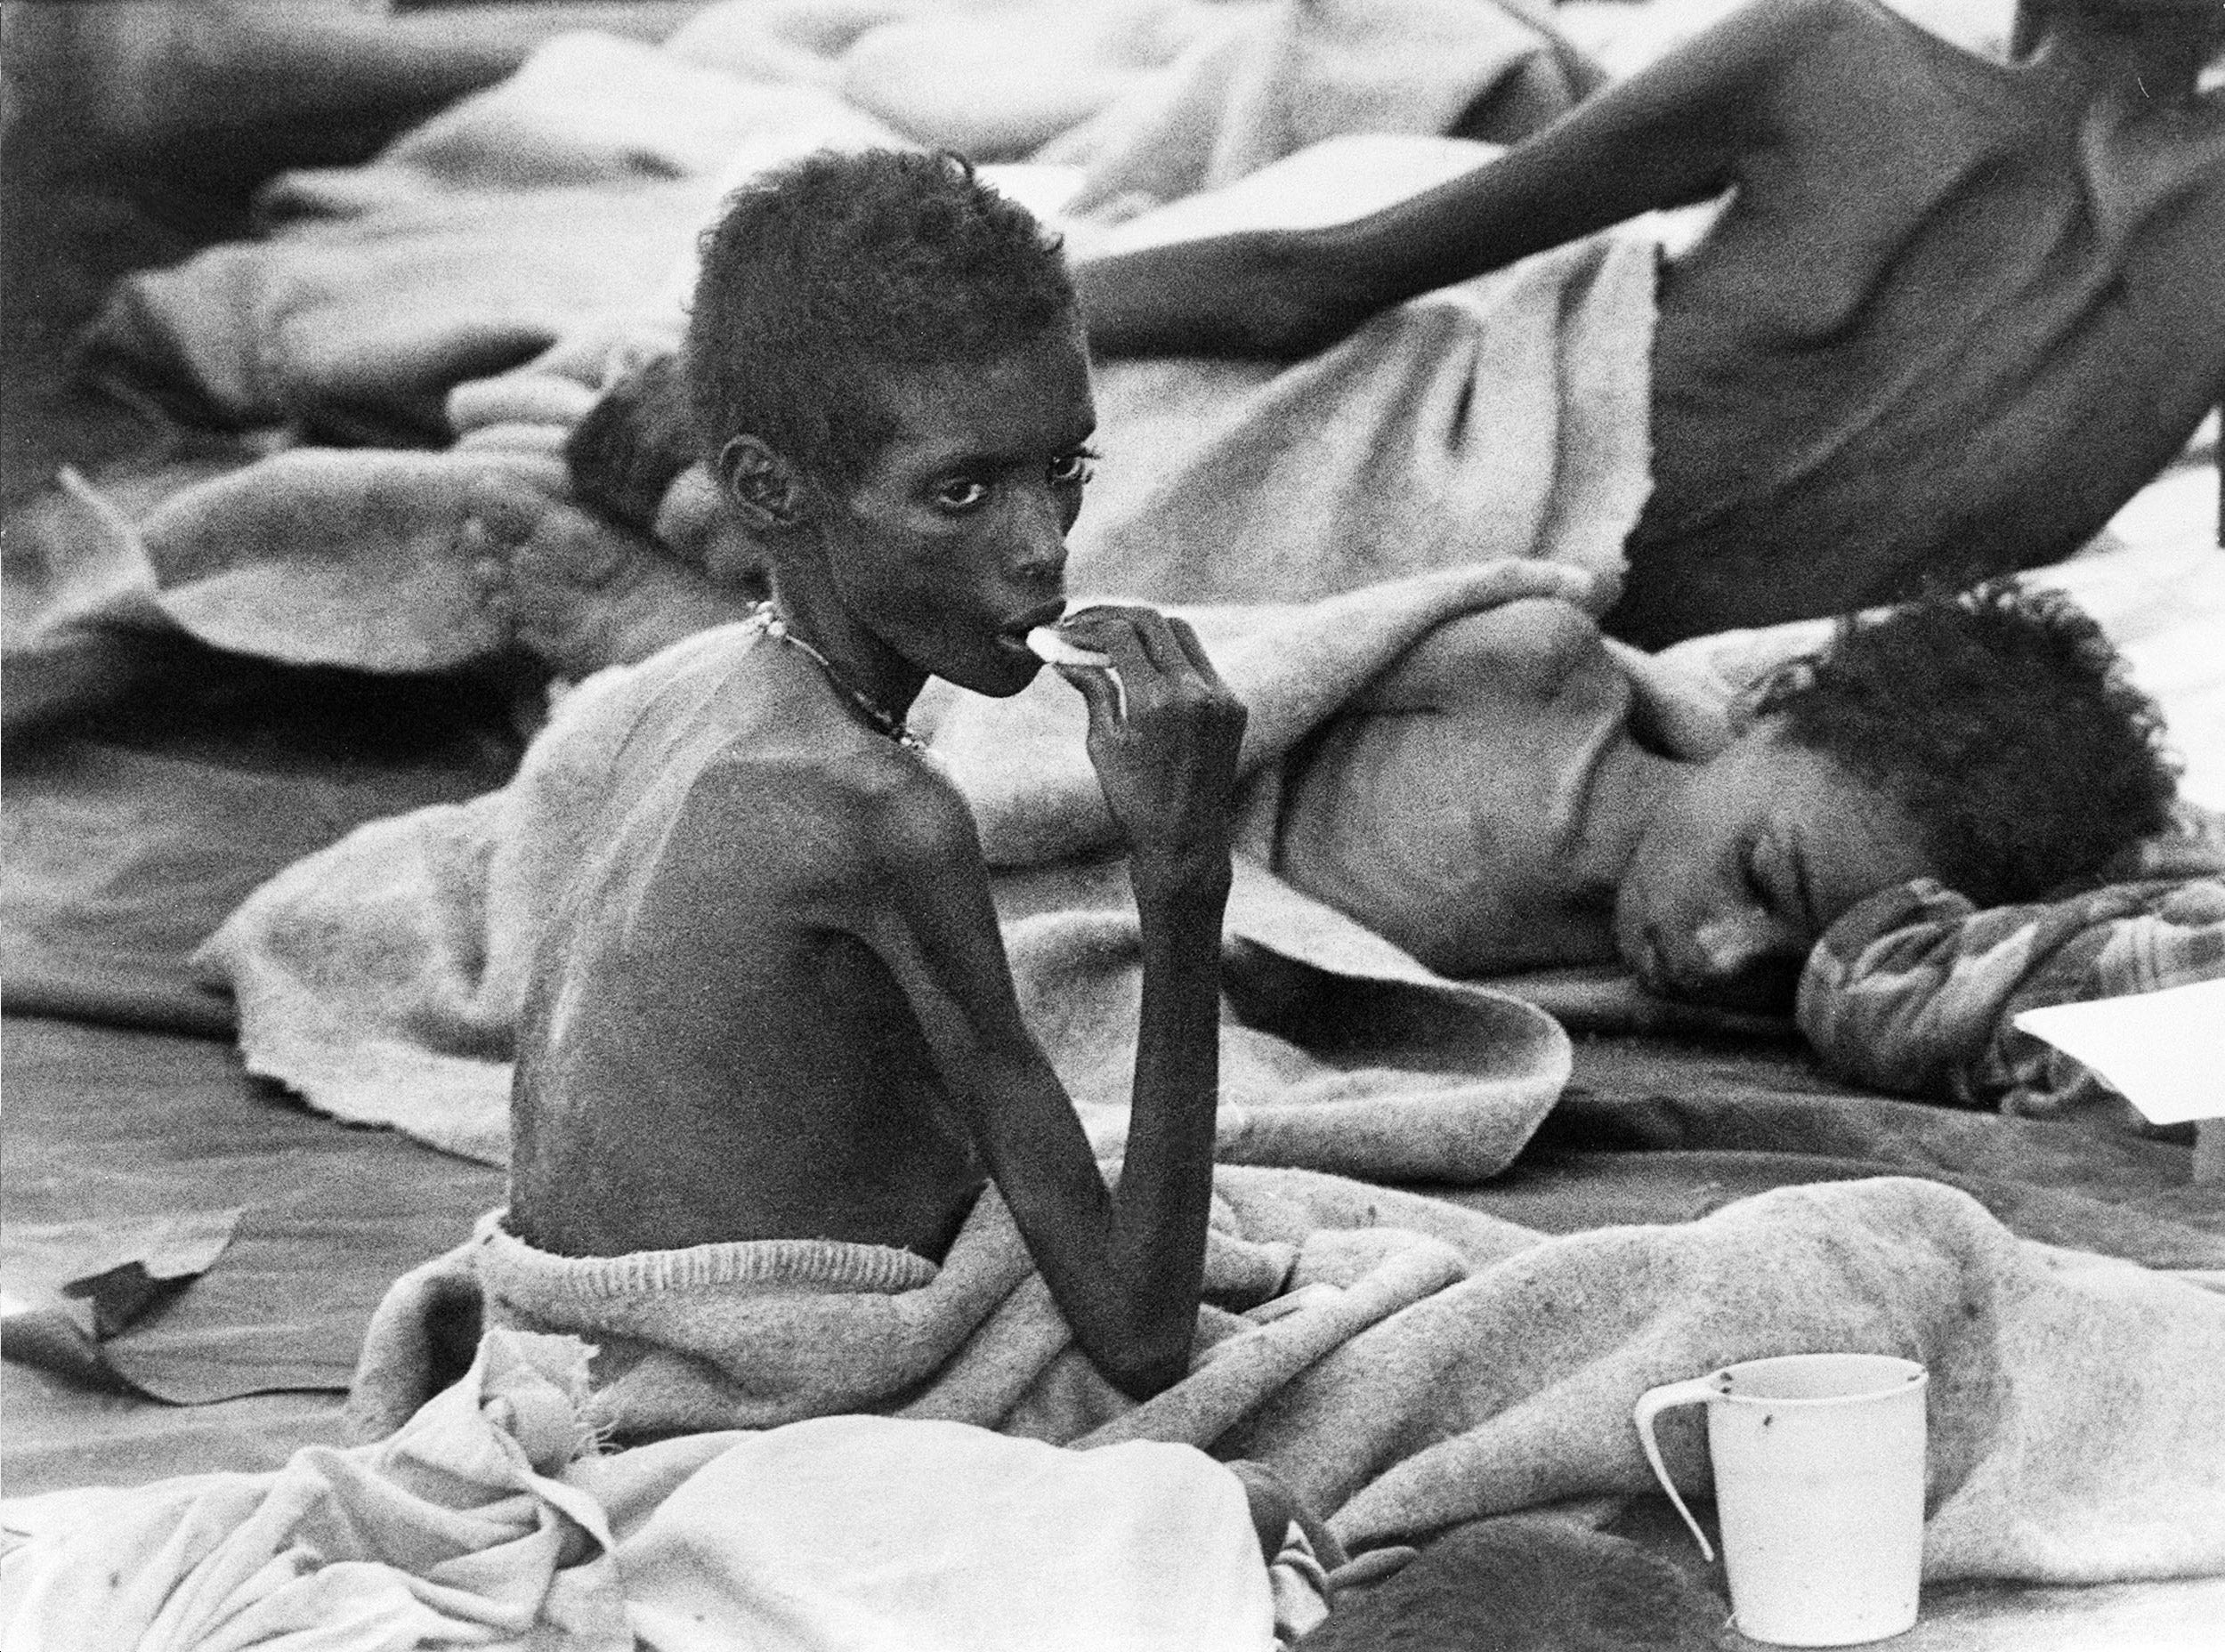 Gallery Photos of "Famine" .